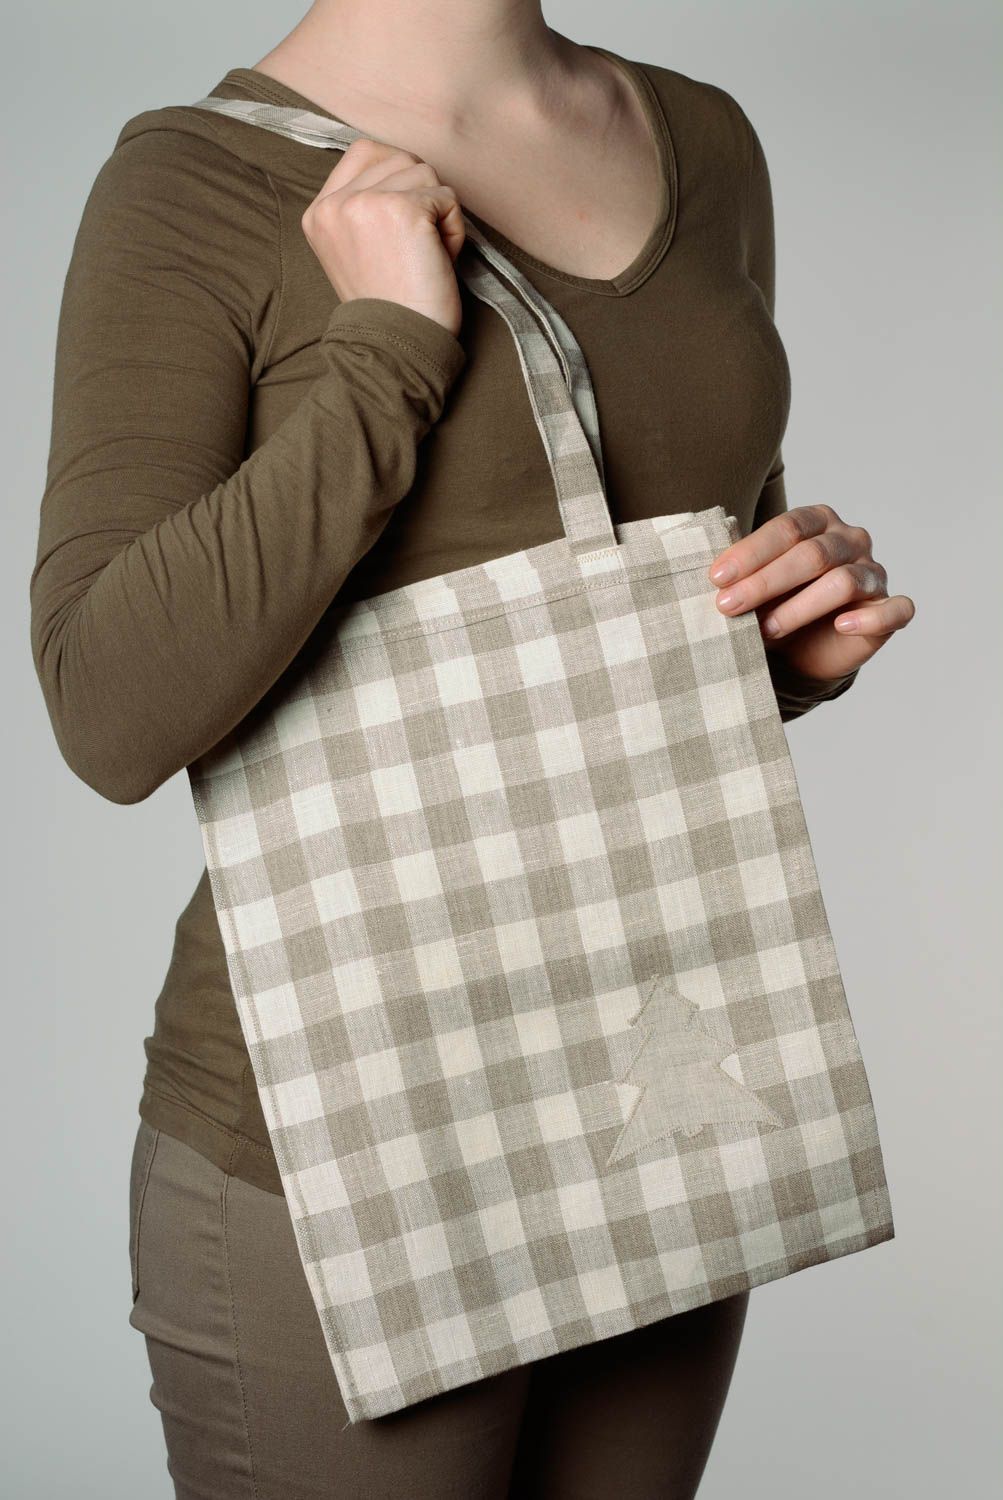 Handmade light checkered linen fabric small eco bag for women photo 3